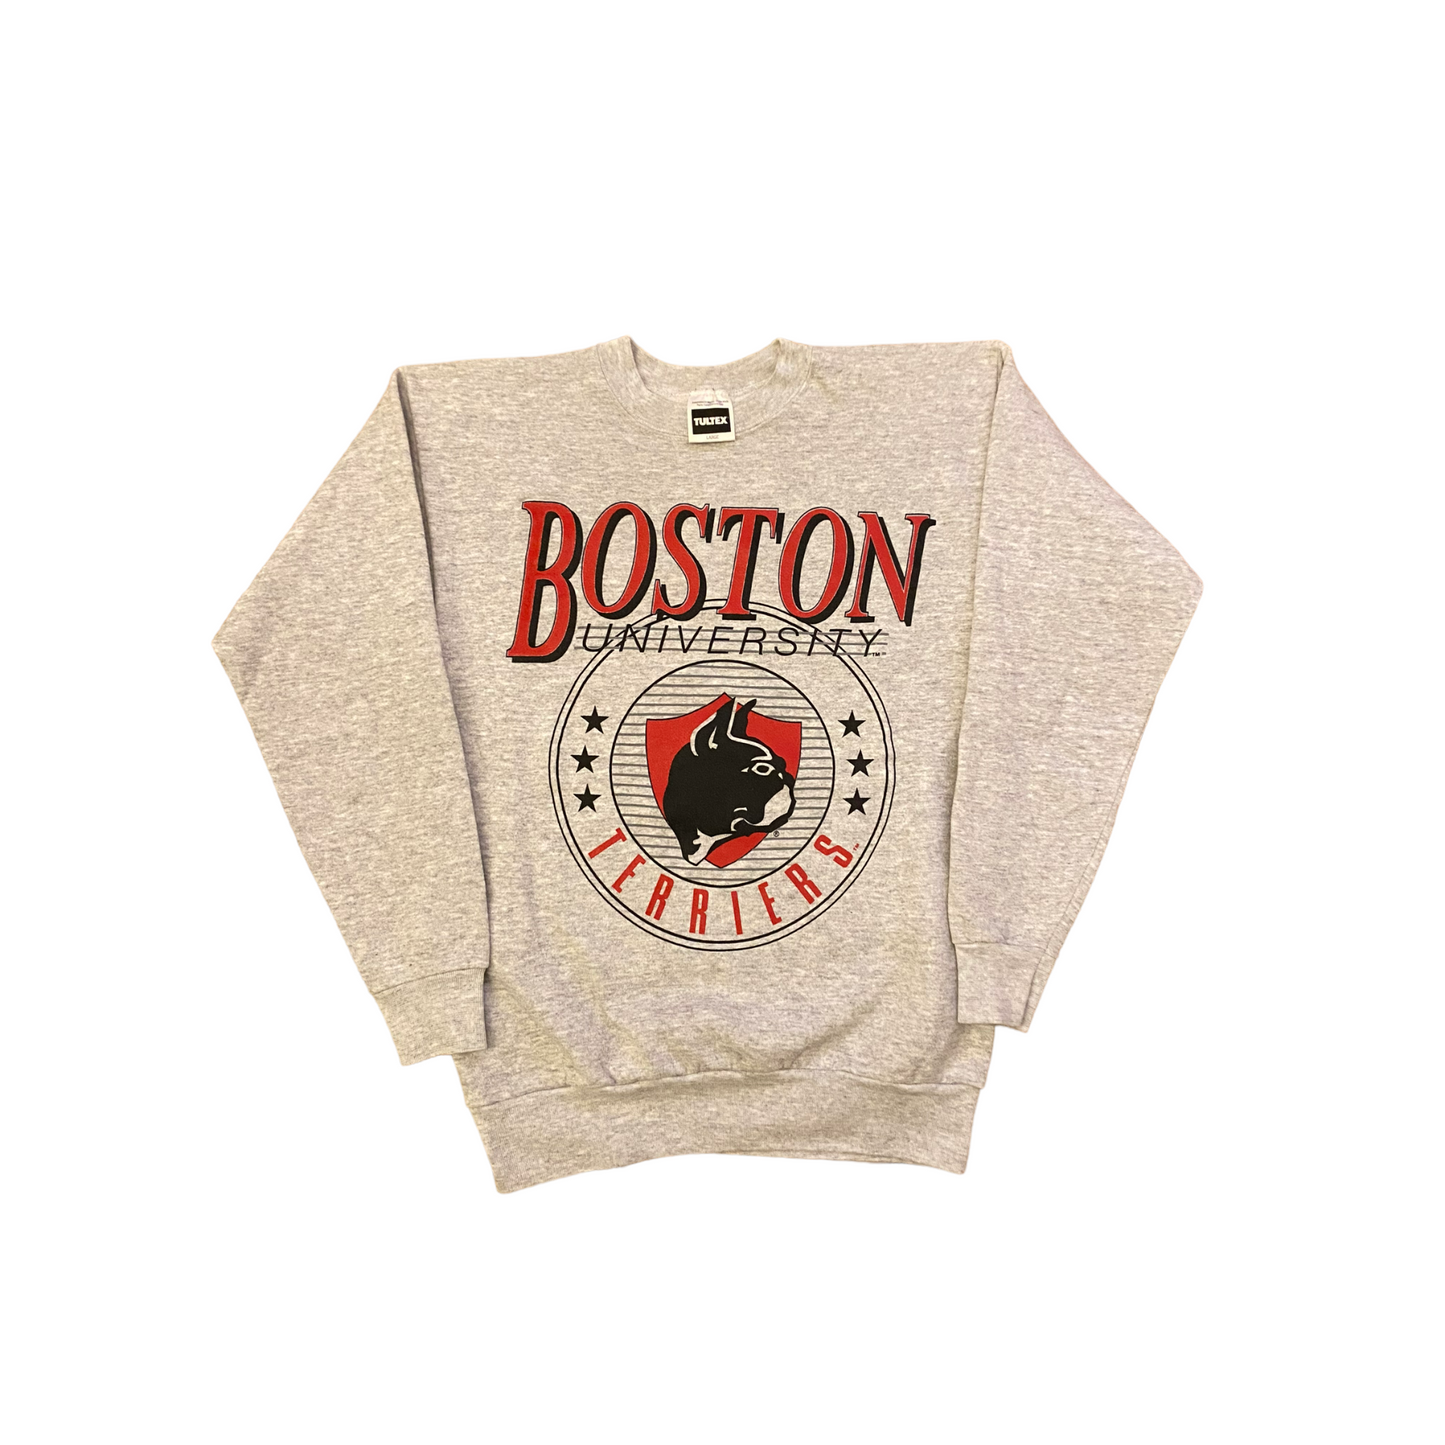 Boston 90s sweatshirt M